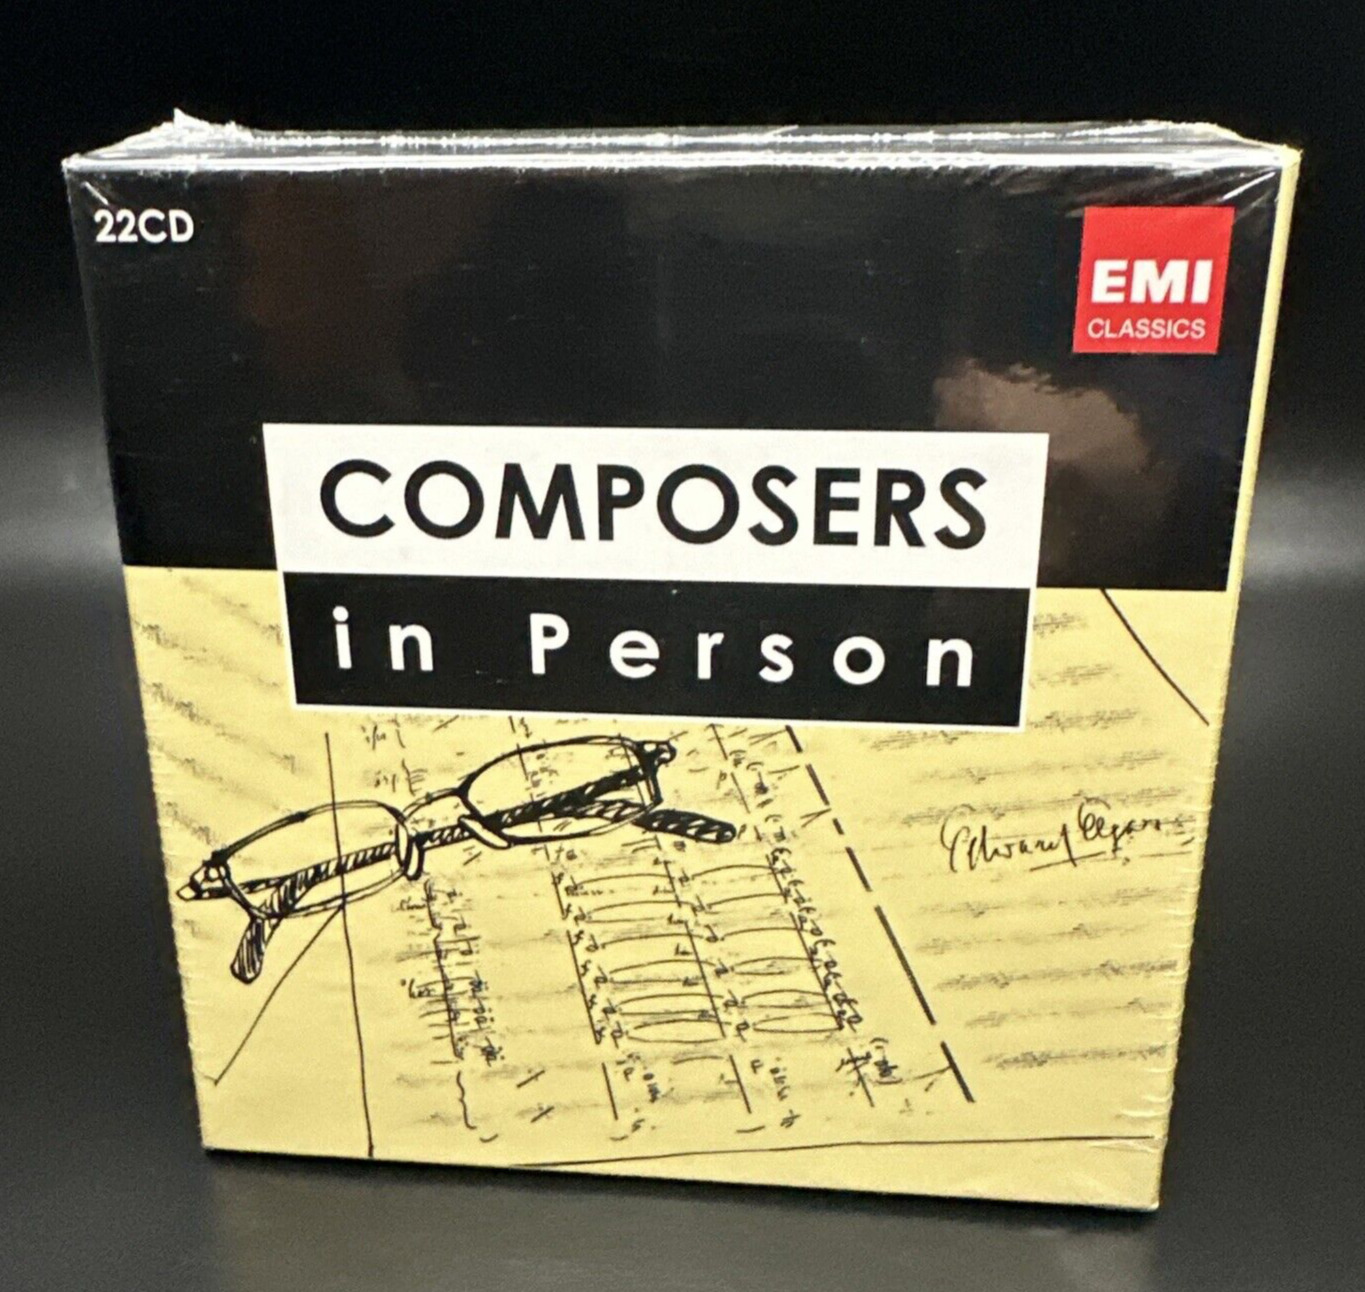 Composers in Person, Stravinsky Poulenc Elgar [EMI 22 CD Box Set] SEALED RARE